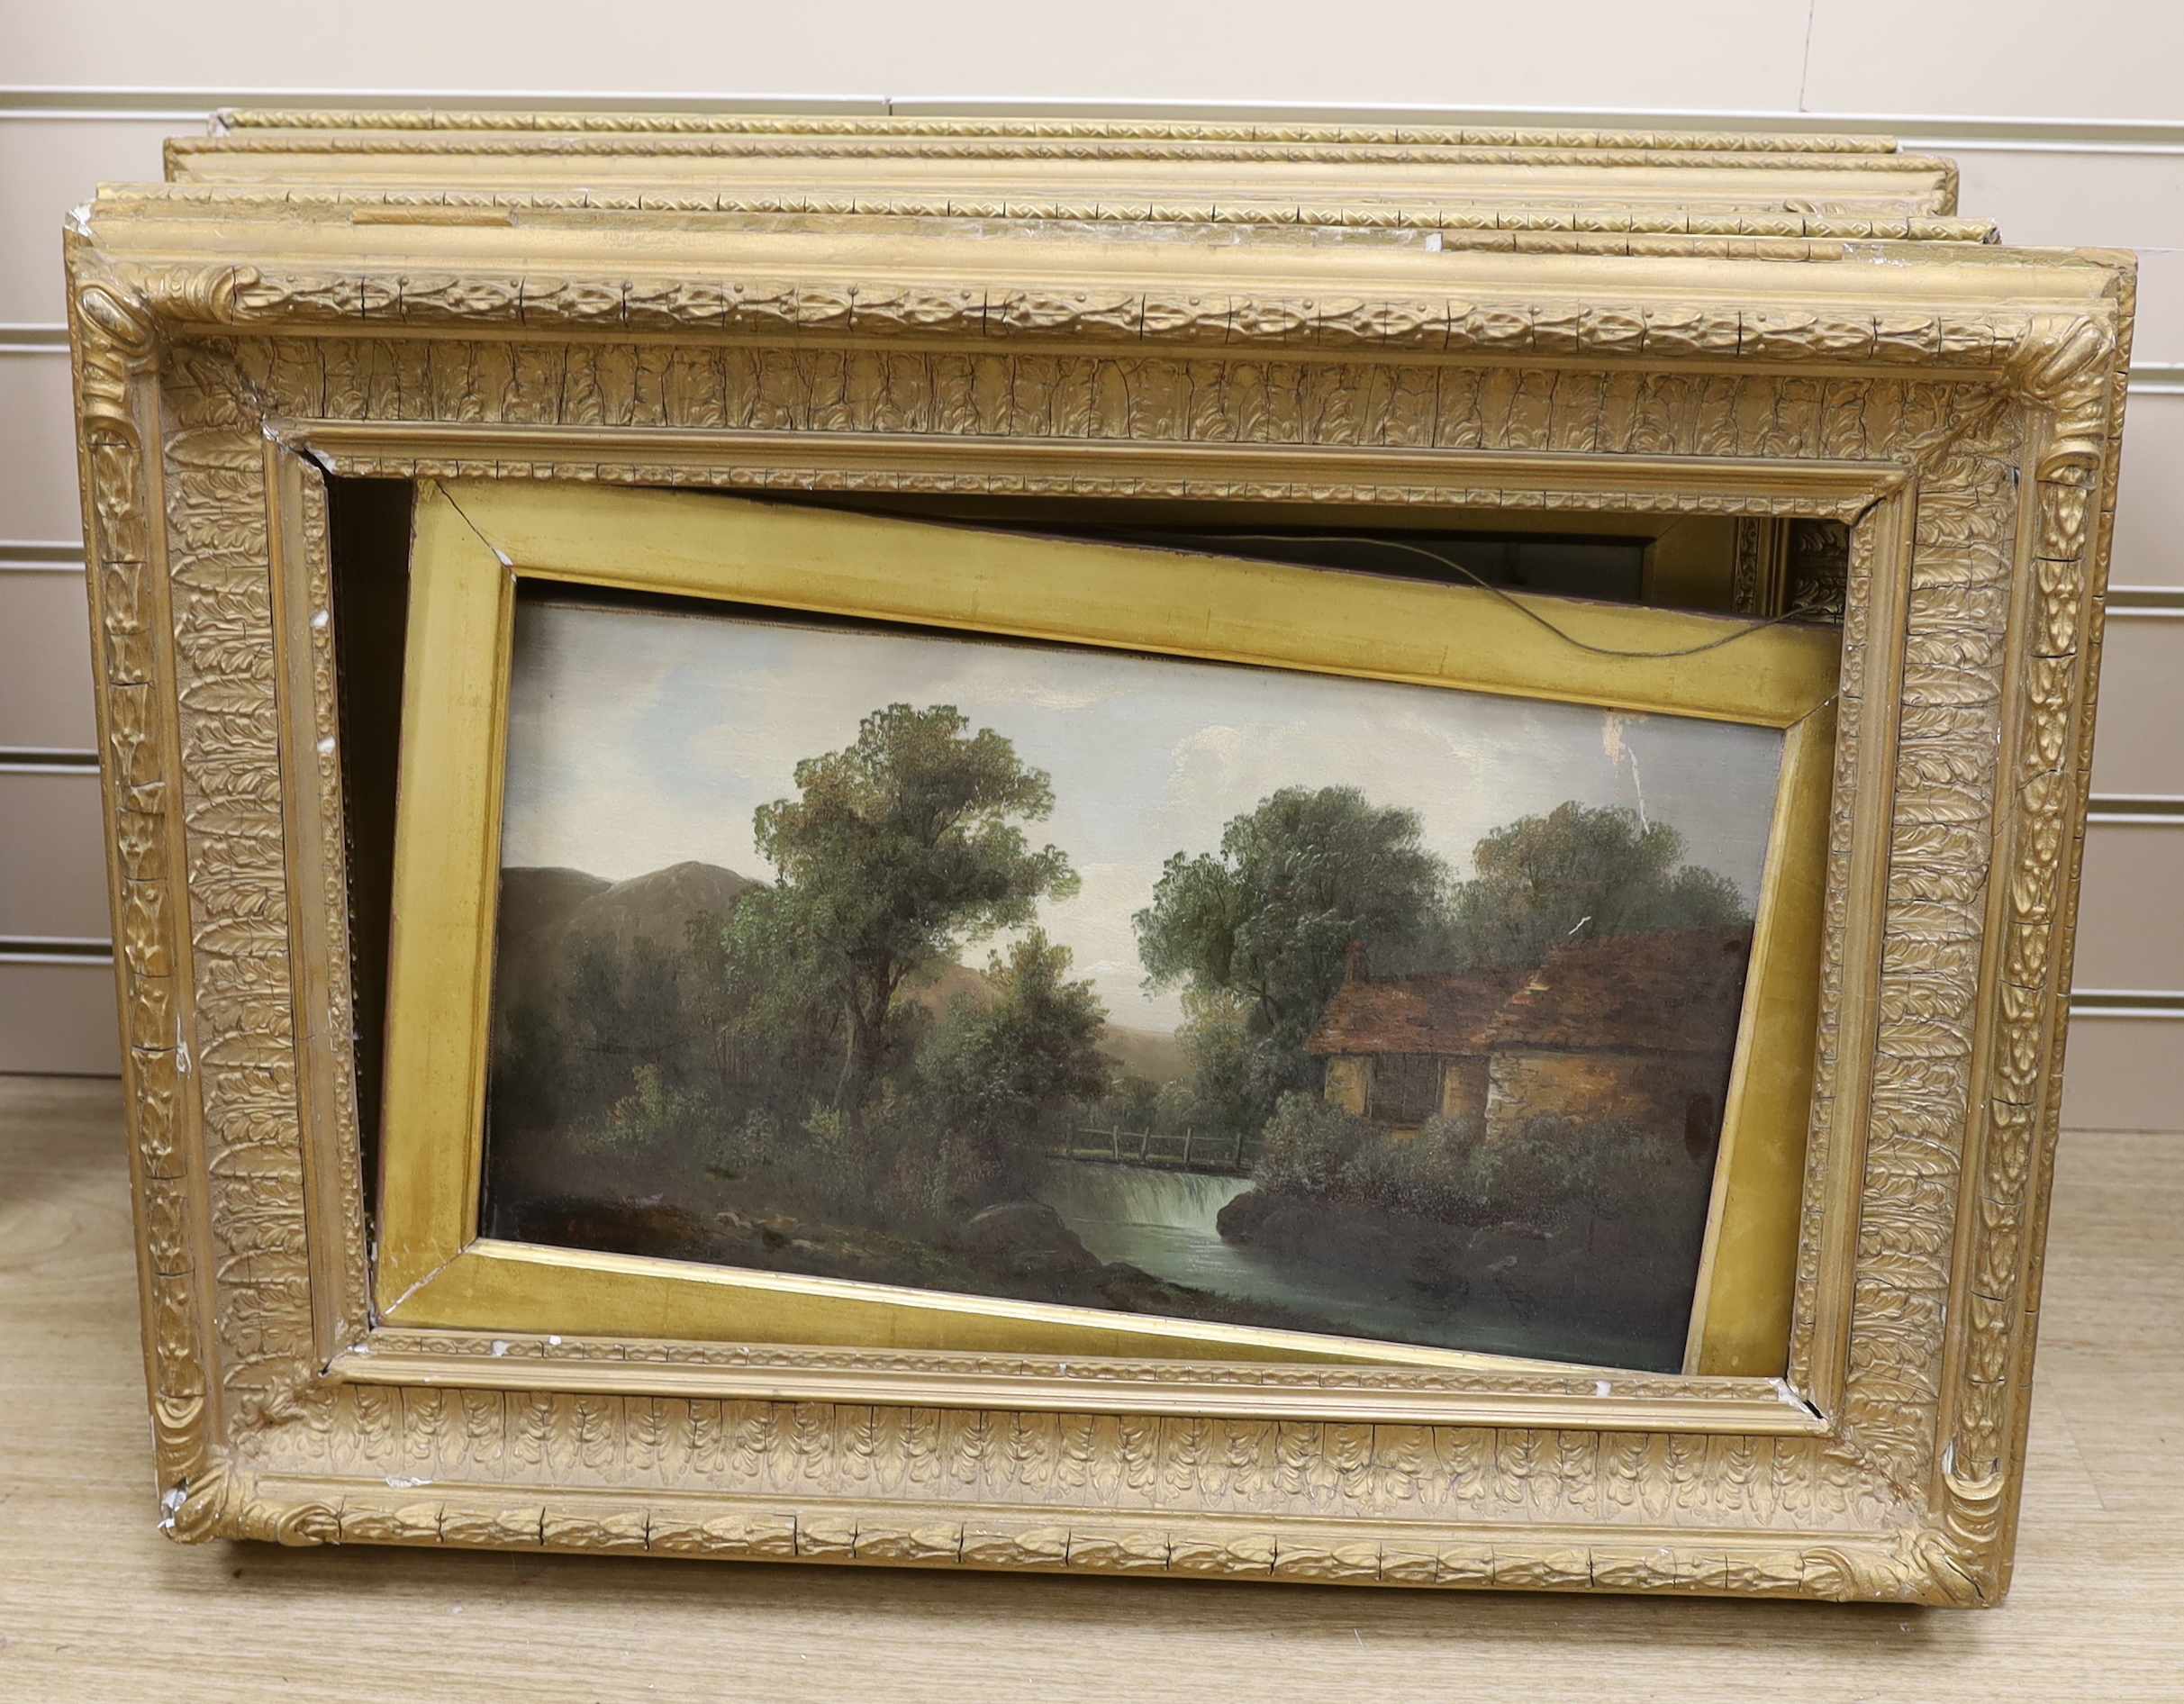 19th century, four oils on canvas, Landscapes, two signed S. Thompson, one signed J. Scott, 26 x 45cm, ornate gilt framed